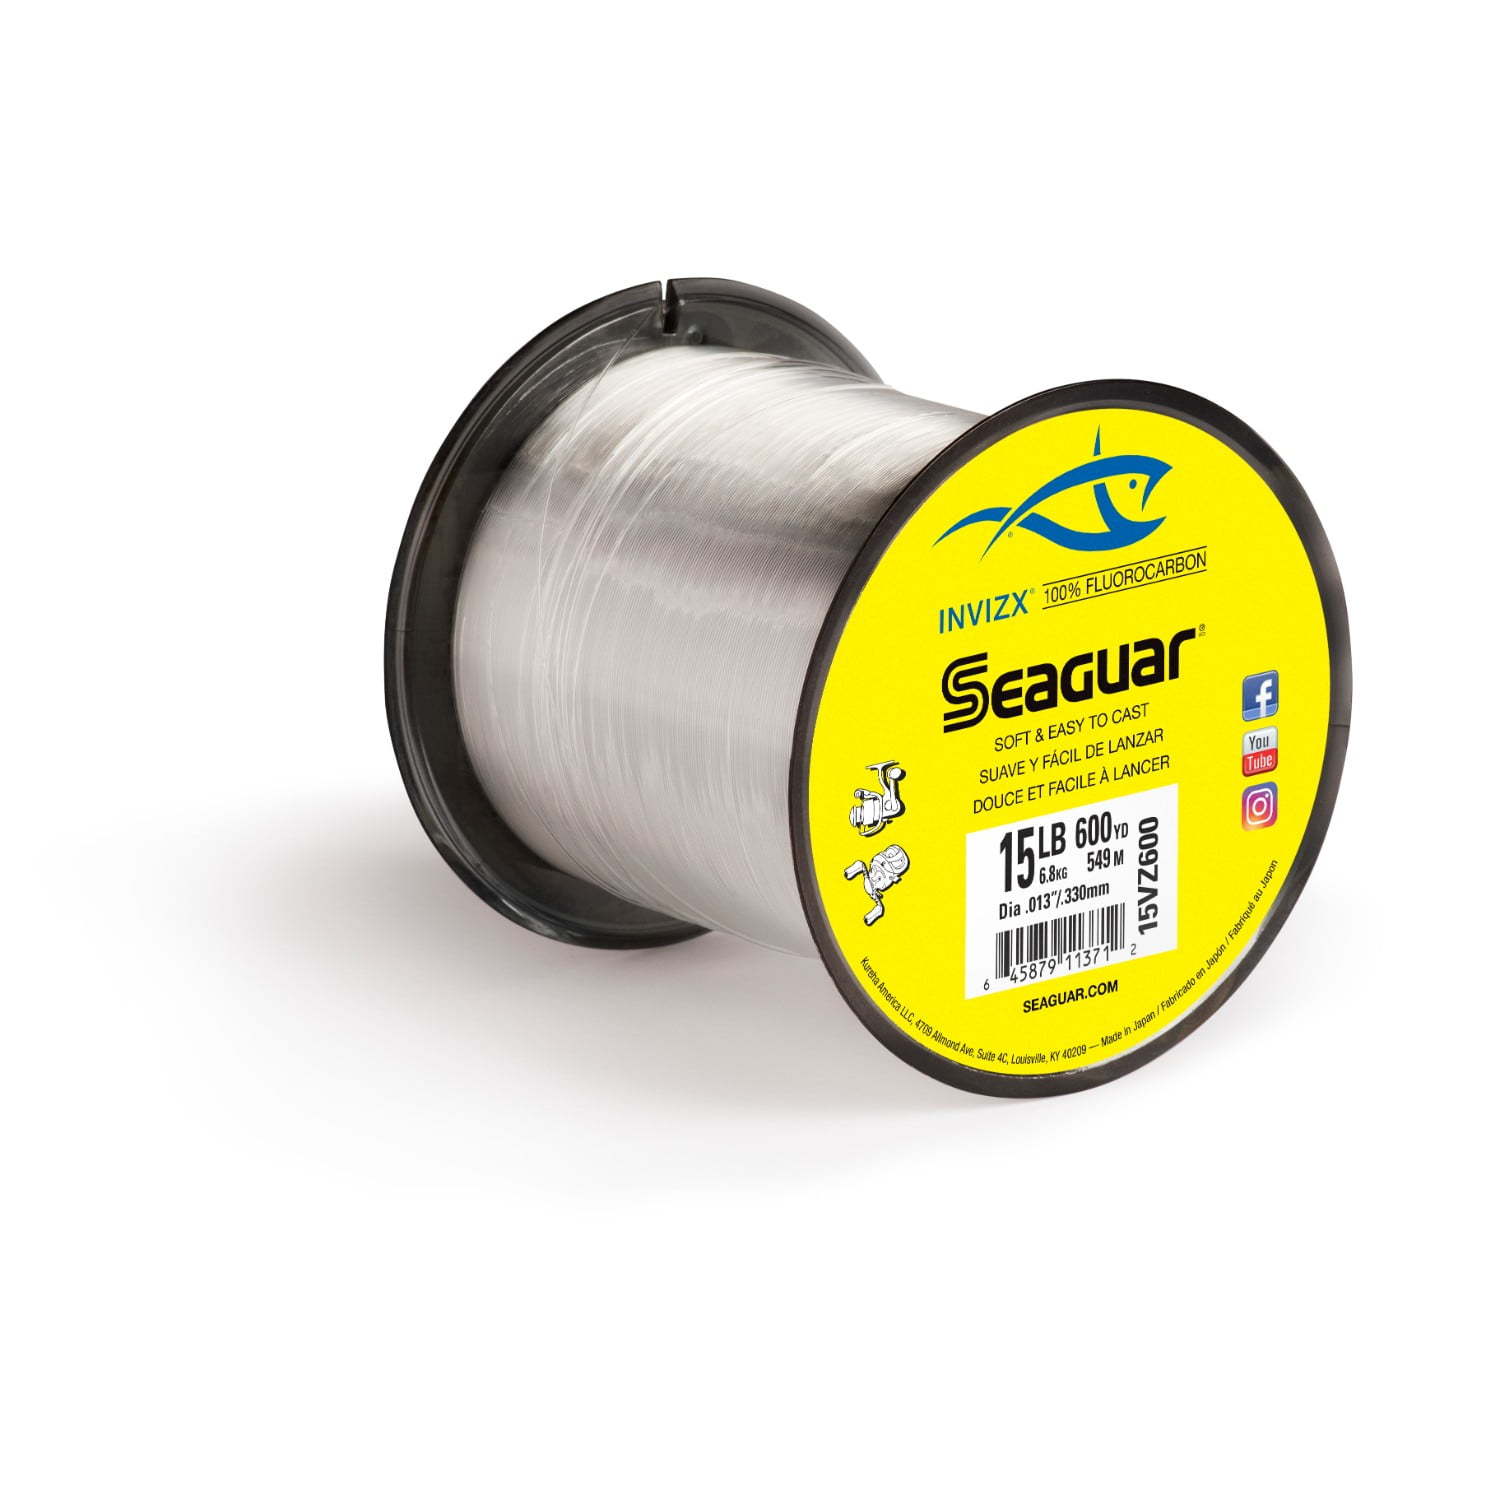 Seaguar InvizX Freshwater 100% Fluorocarbon Fishing Line 12lbs